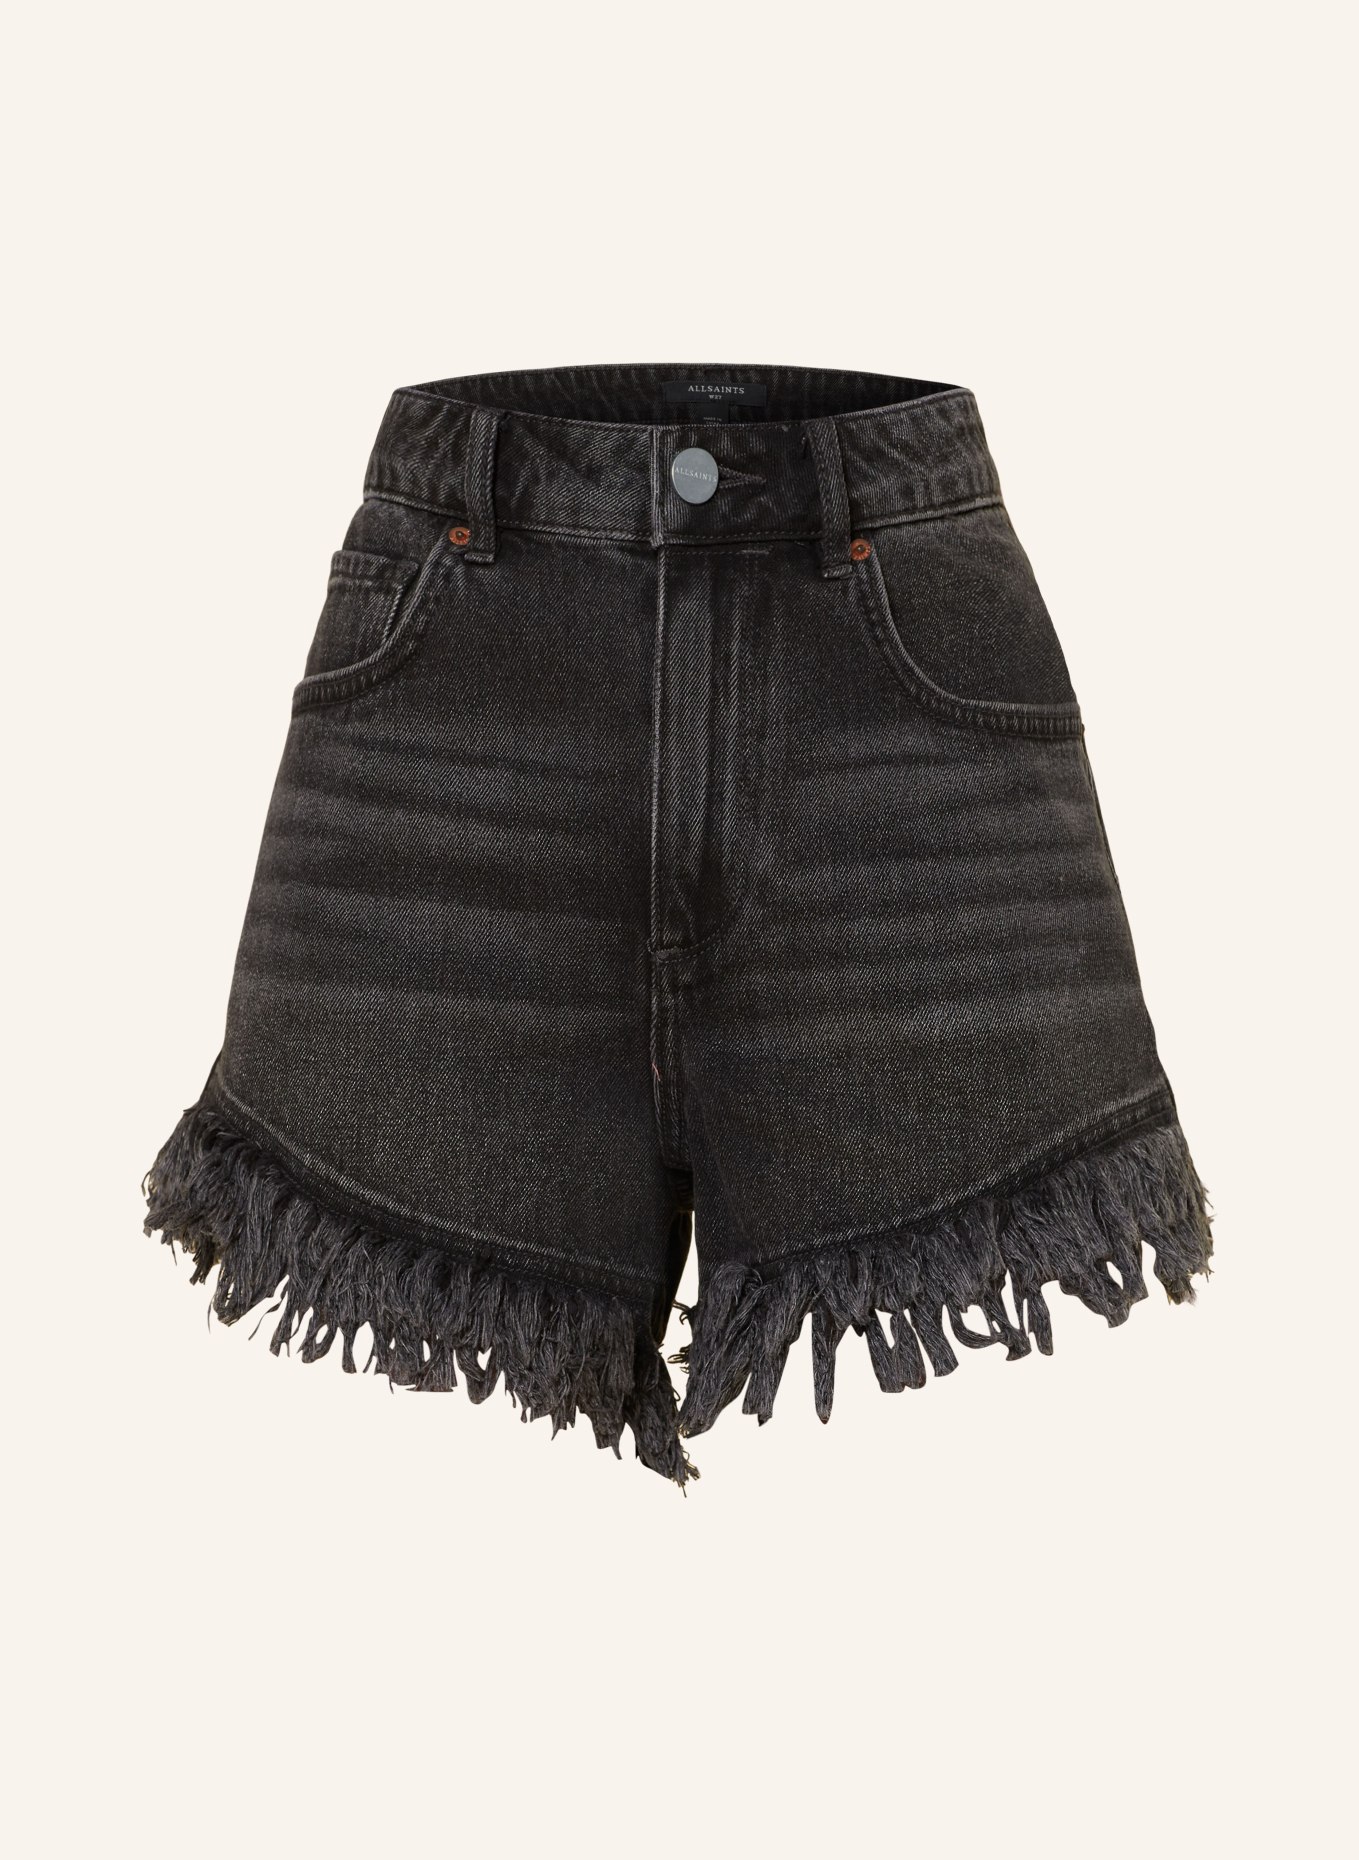 ALLSAINTS Jeanshorts ASTRID, Farbe: 162 Washed Black (Bild 1)